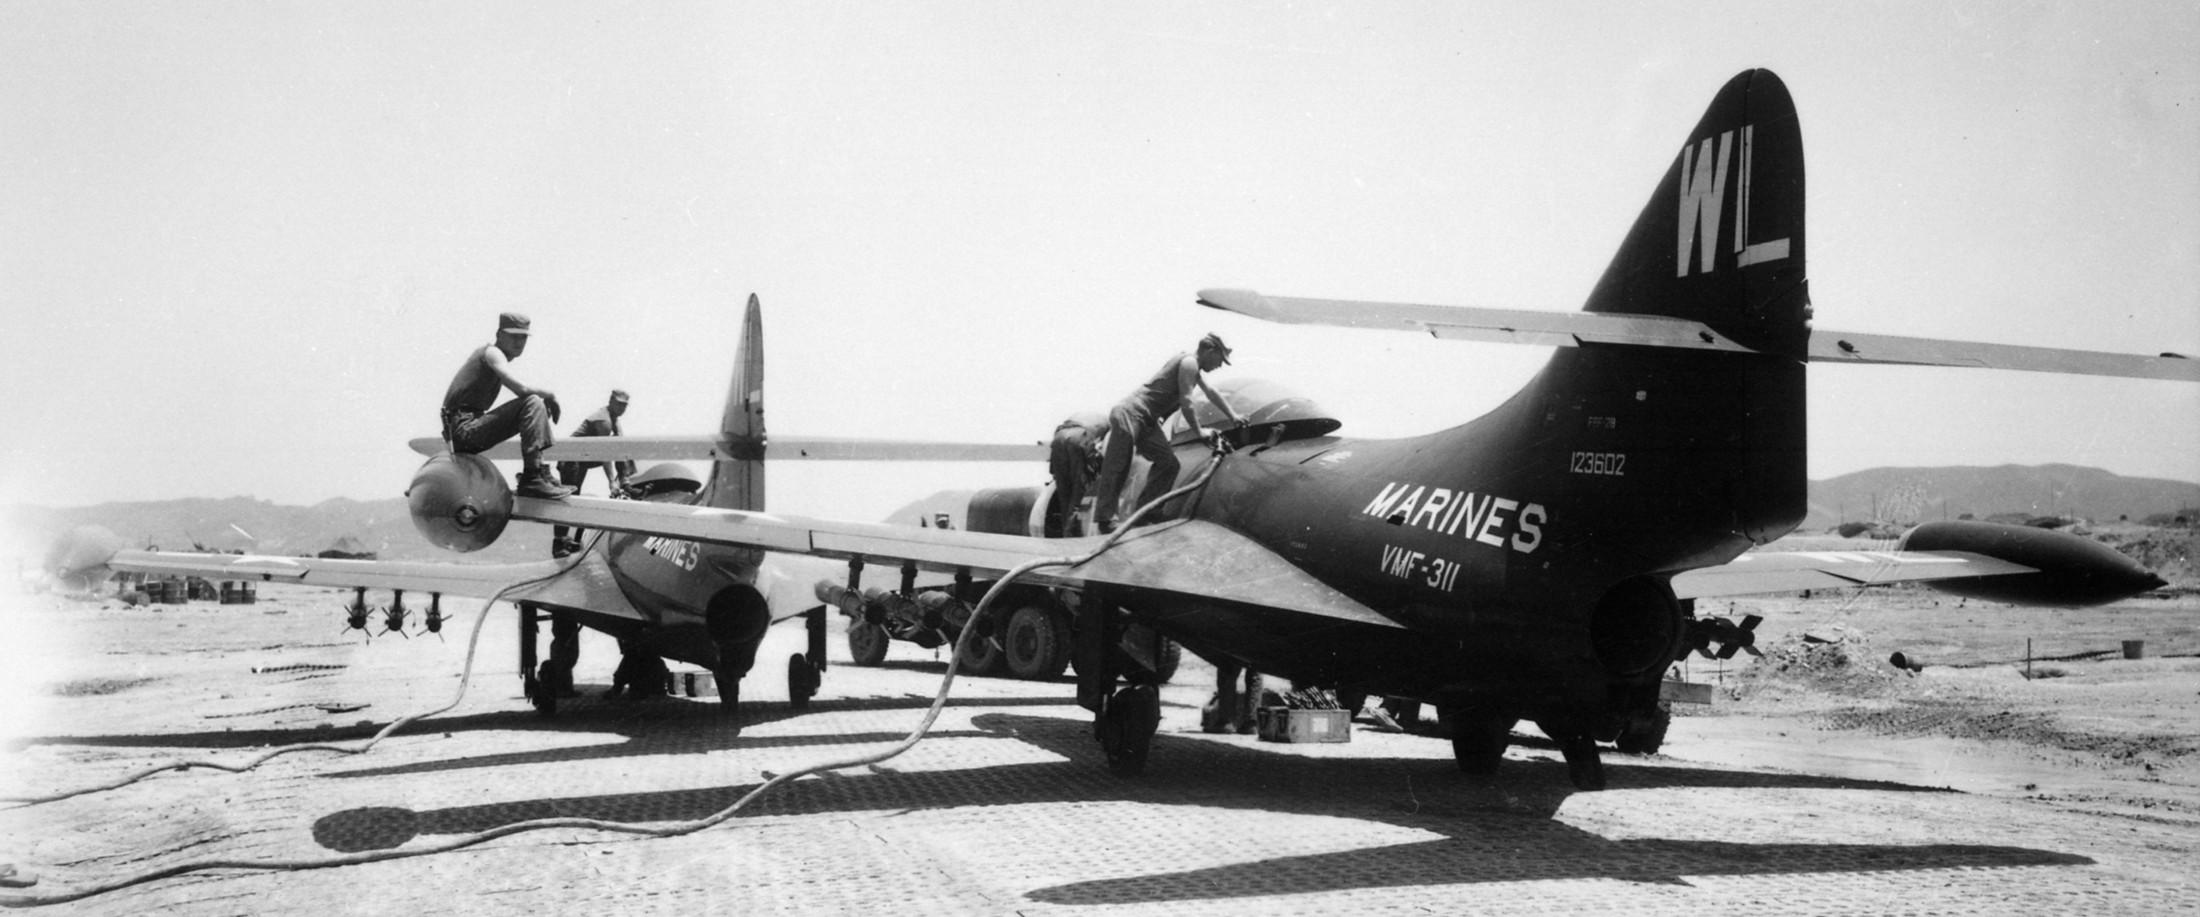 vmf-311 tomcats marine fighter squadron usmc grumman f9f-2 panther korean war 114